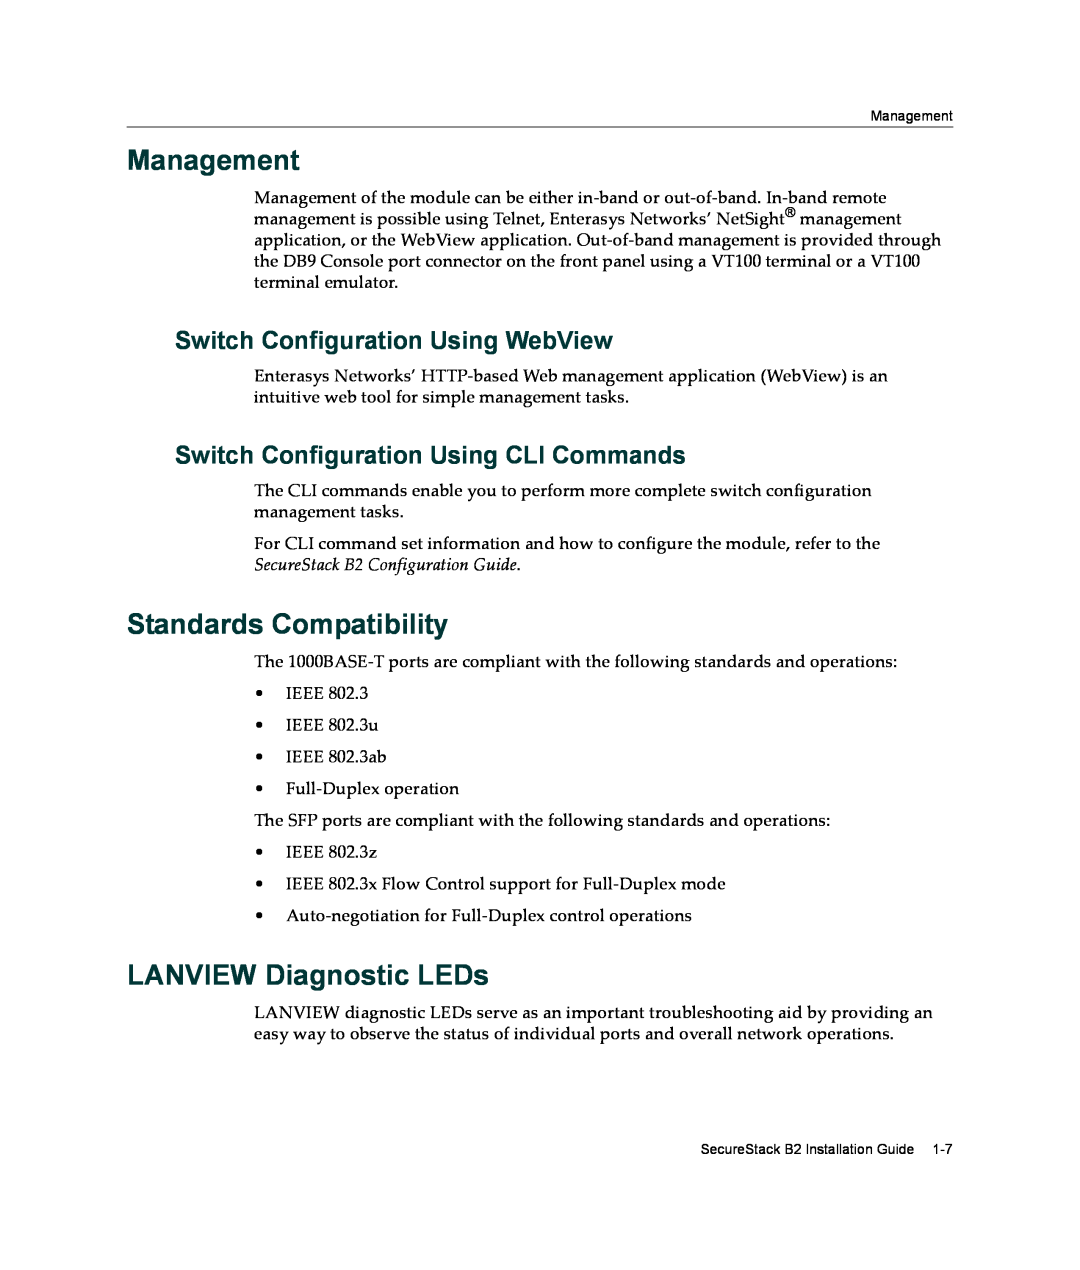 Enterasys Networks B2G124-24 manual Management, Standards Compatibility, LANVIEW Diagnostic LEDs 